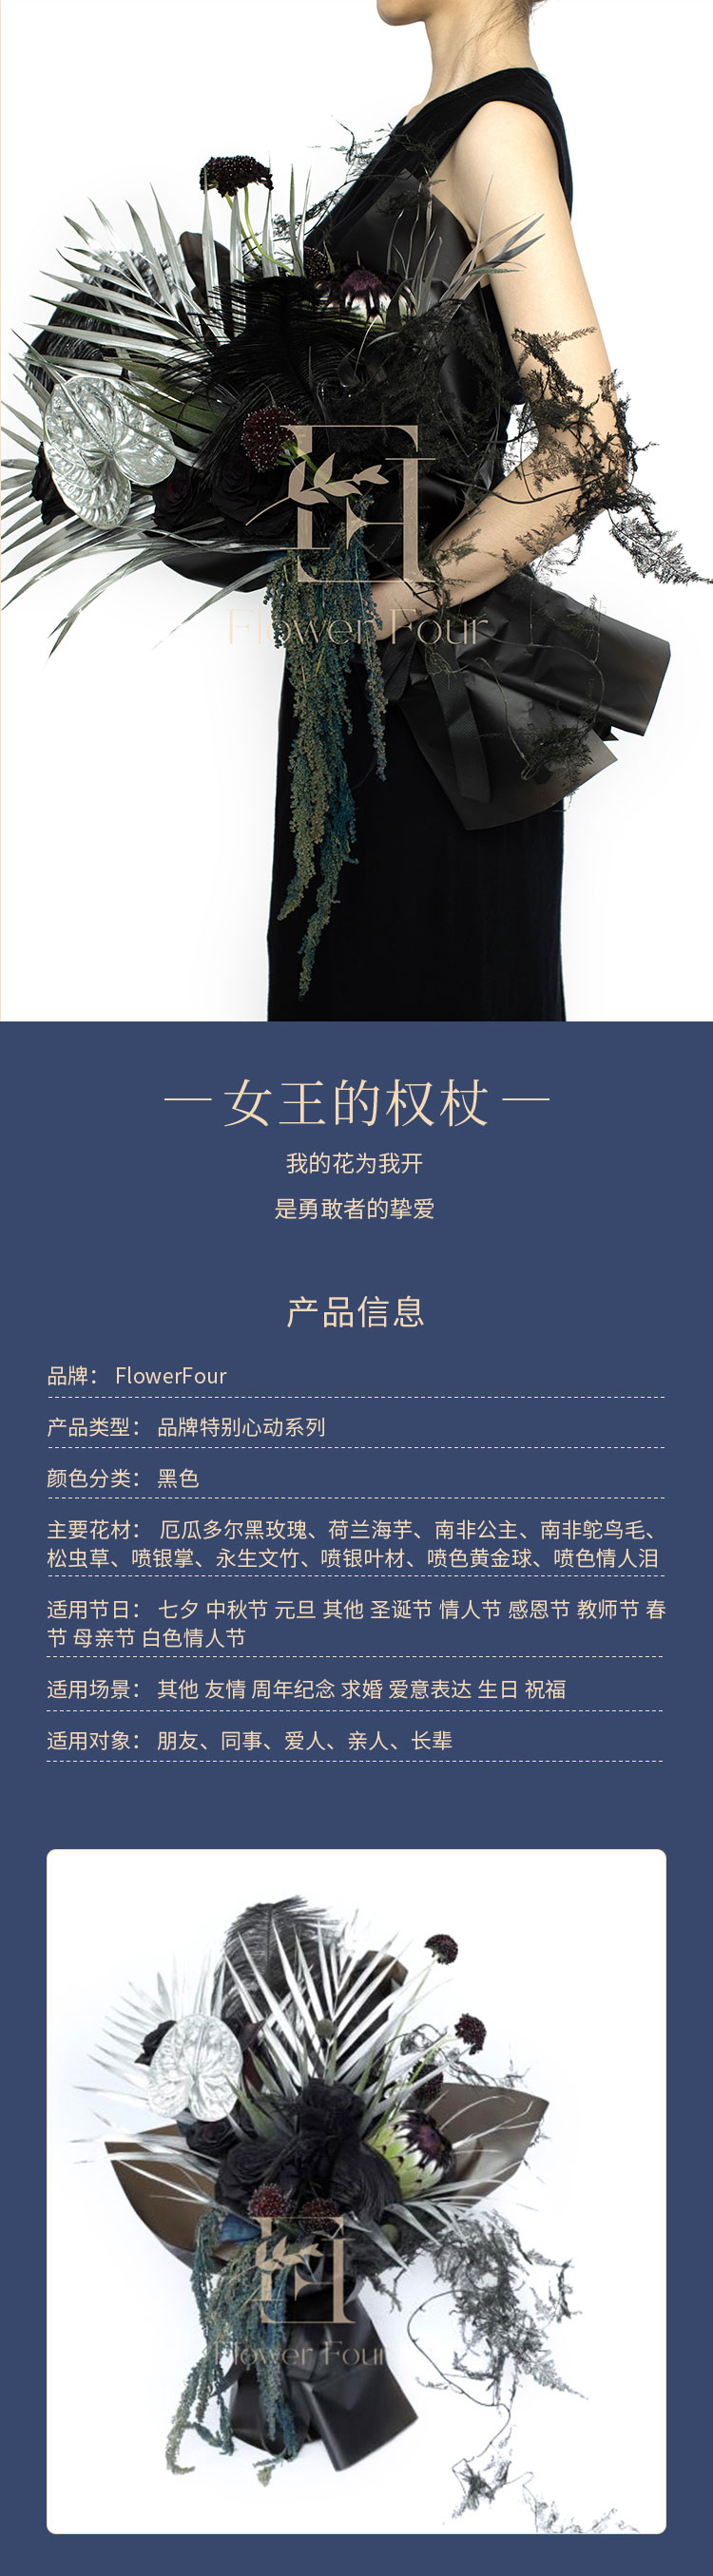 FlowerFour/FlowerFour 进口花材鲜花花束 女王的权杖 生日纪念日节日花束【北京地区专享】